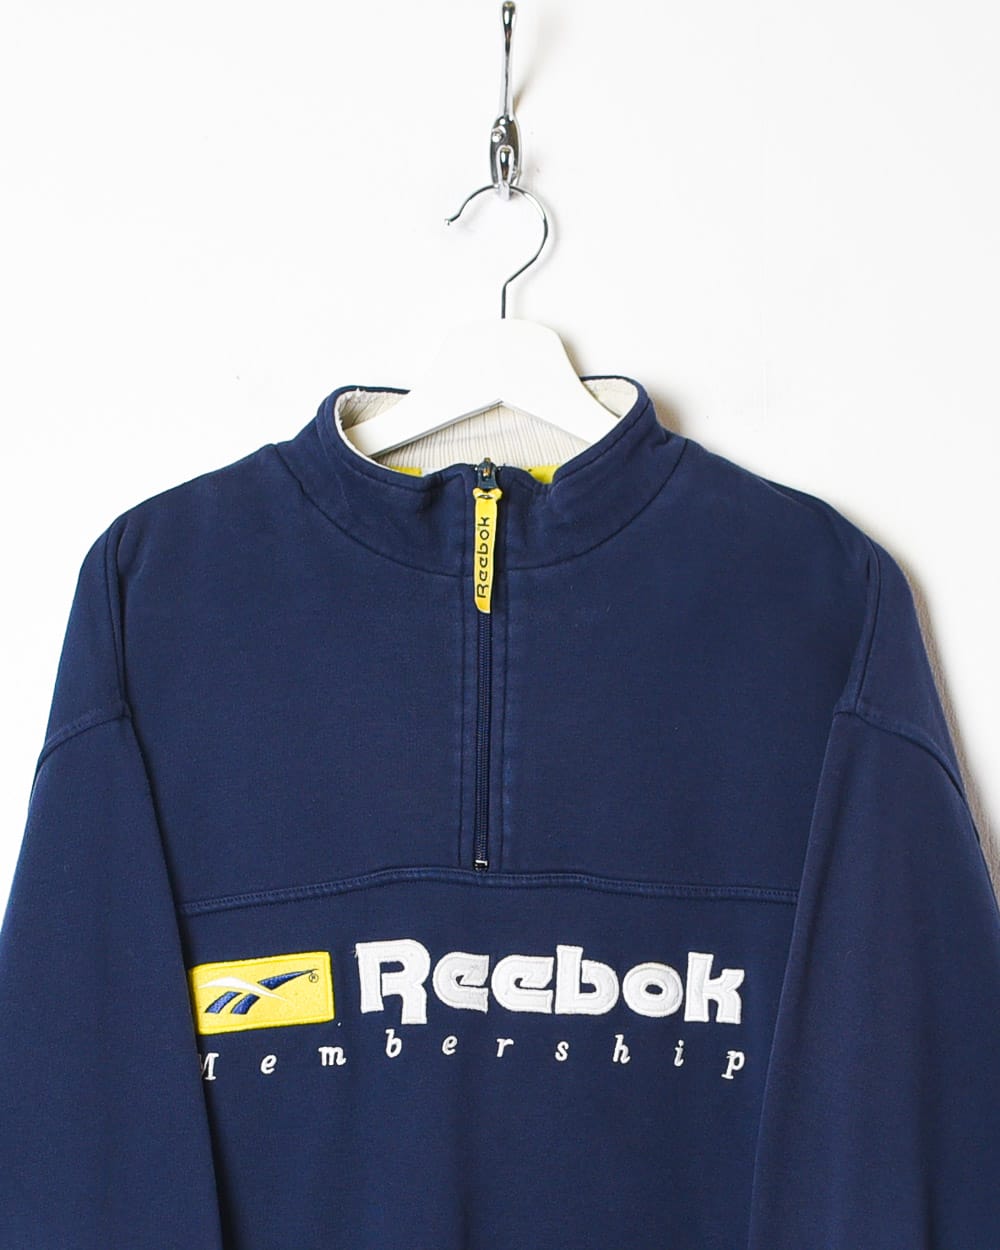 Navy Reebok Membership 1/4 Zip Sweatshirt - Medium